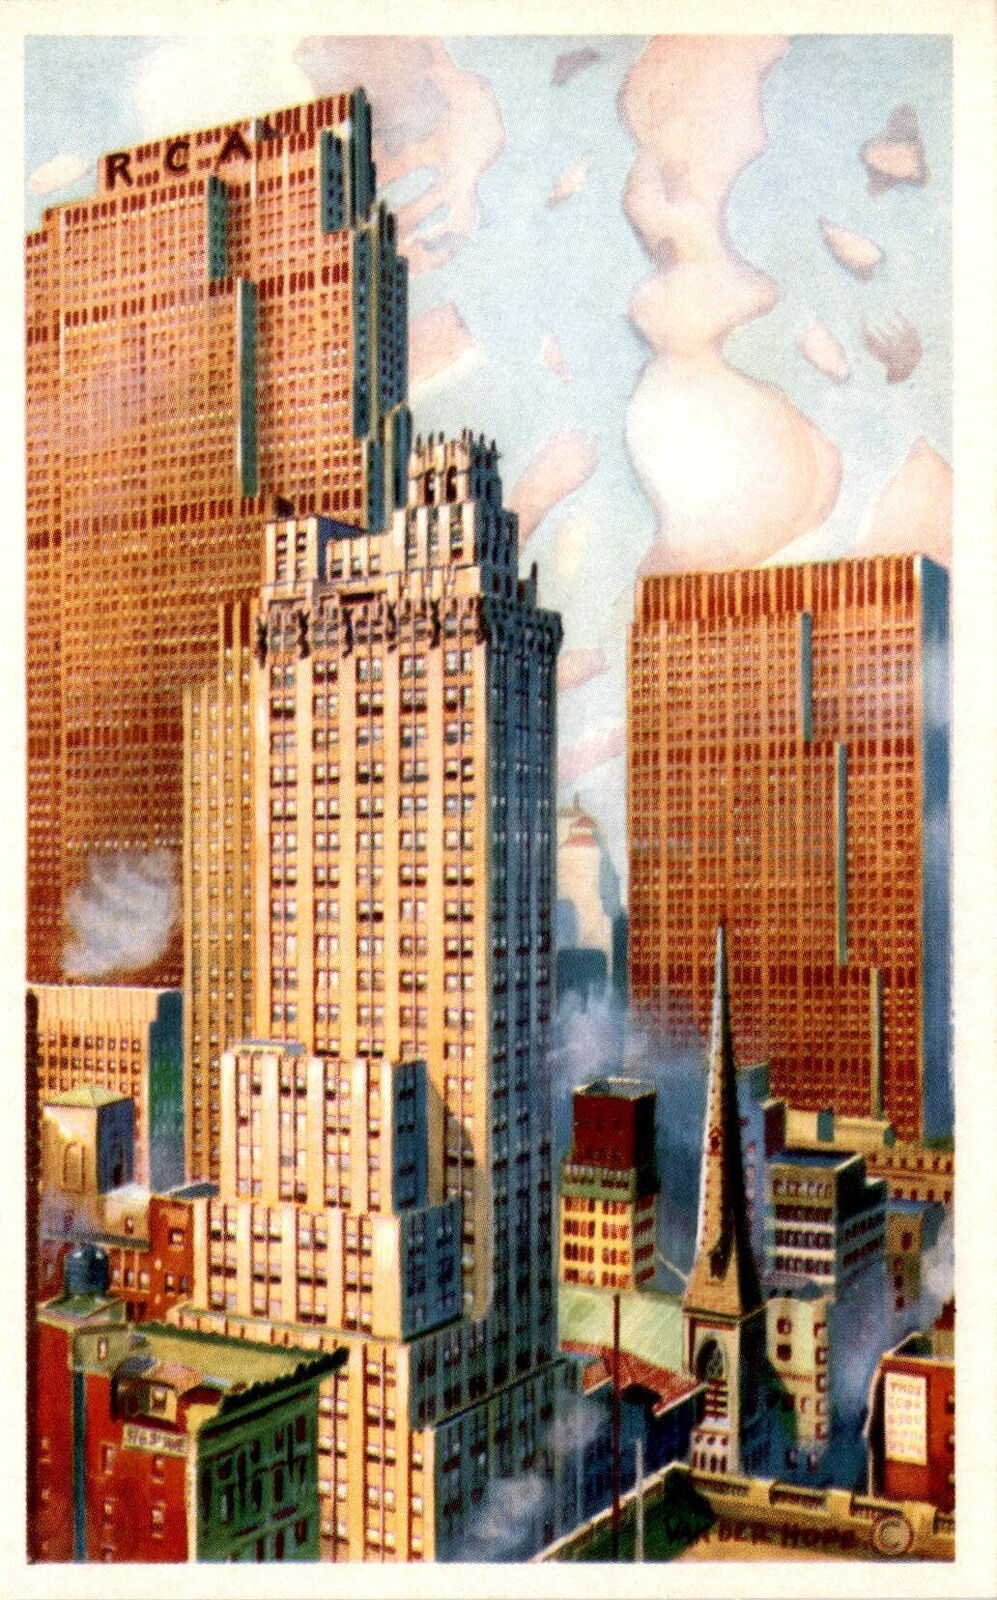 Rockefeller Center, New York City, R.C.A., International Building, Postcard